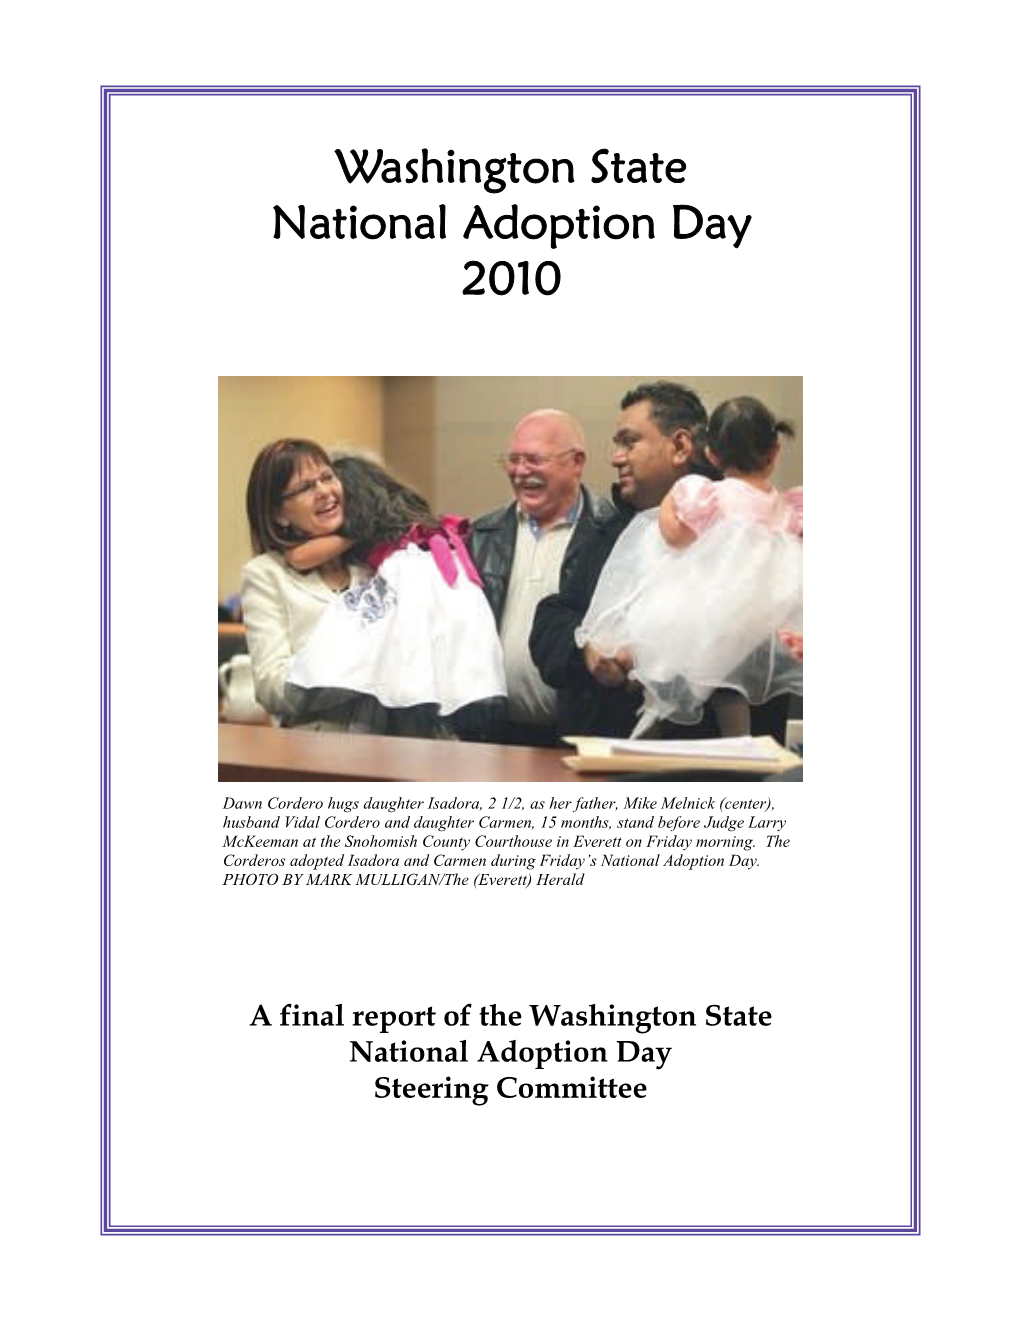 Washington State National Adoption Day 2010